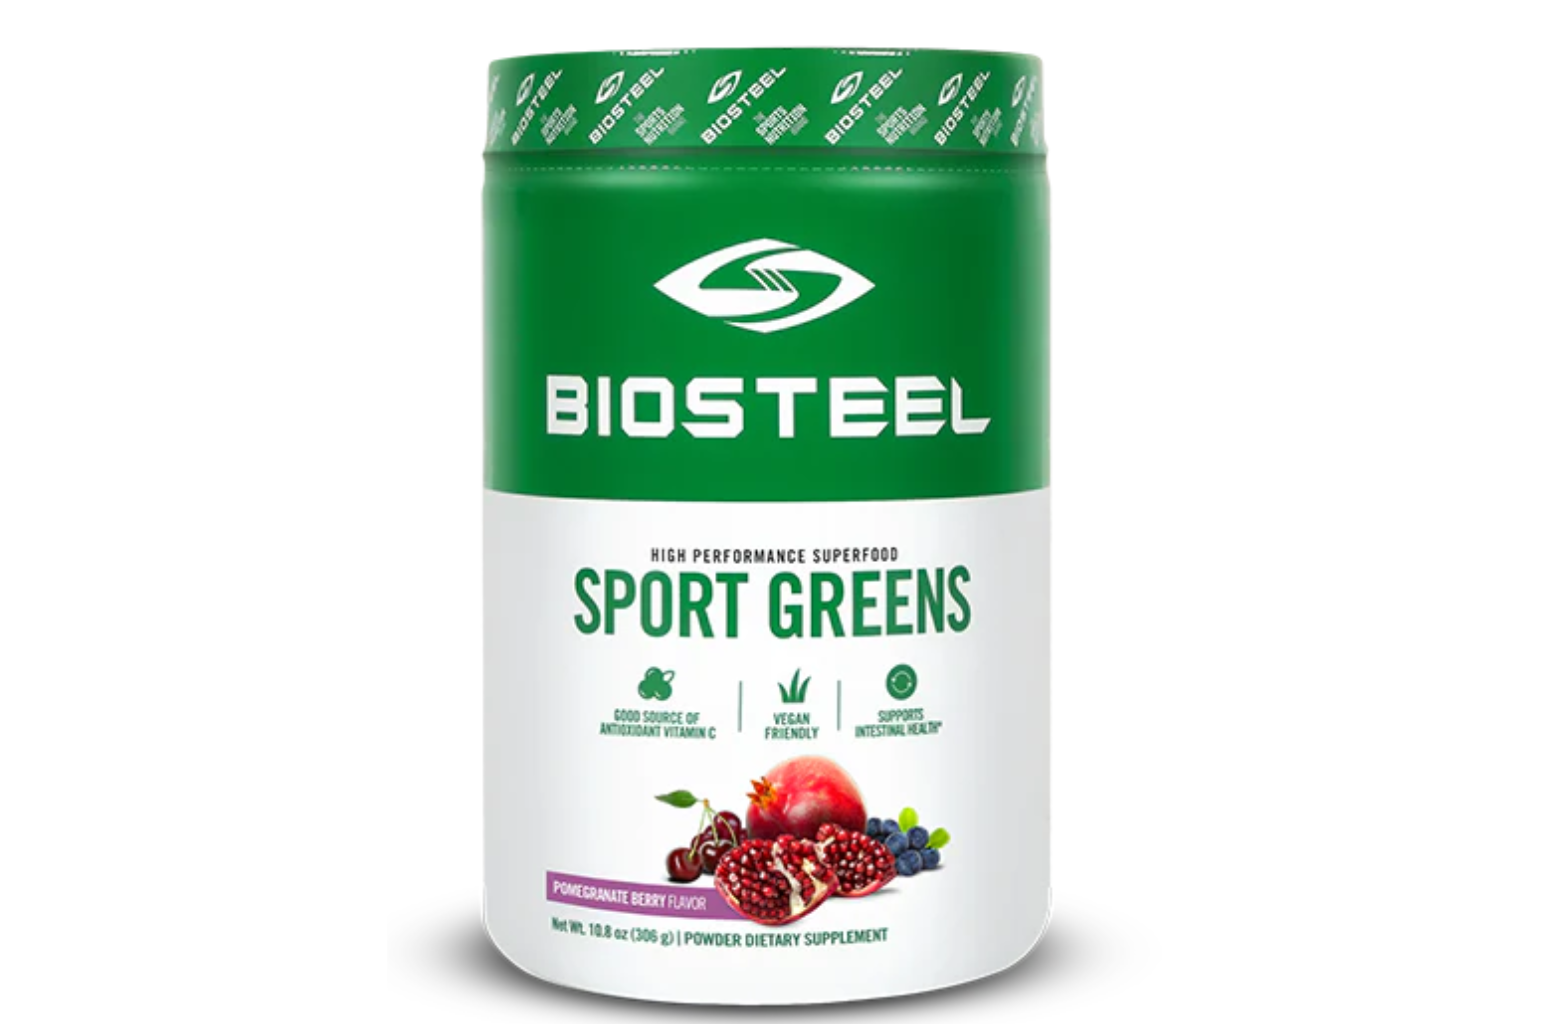 Sports Drink / Rainbow Twist - 12 Pack – BioSteel – Canada